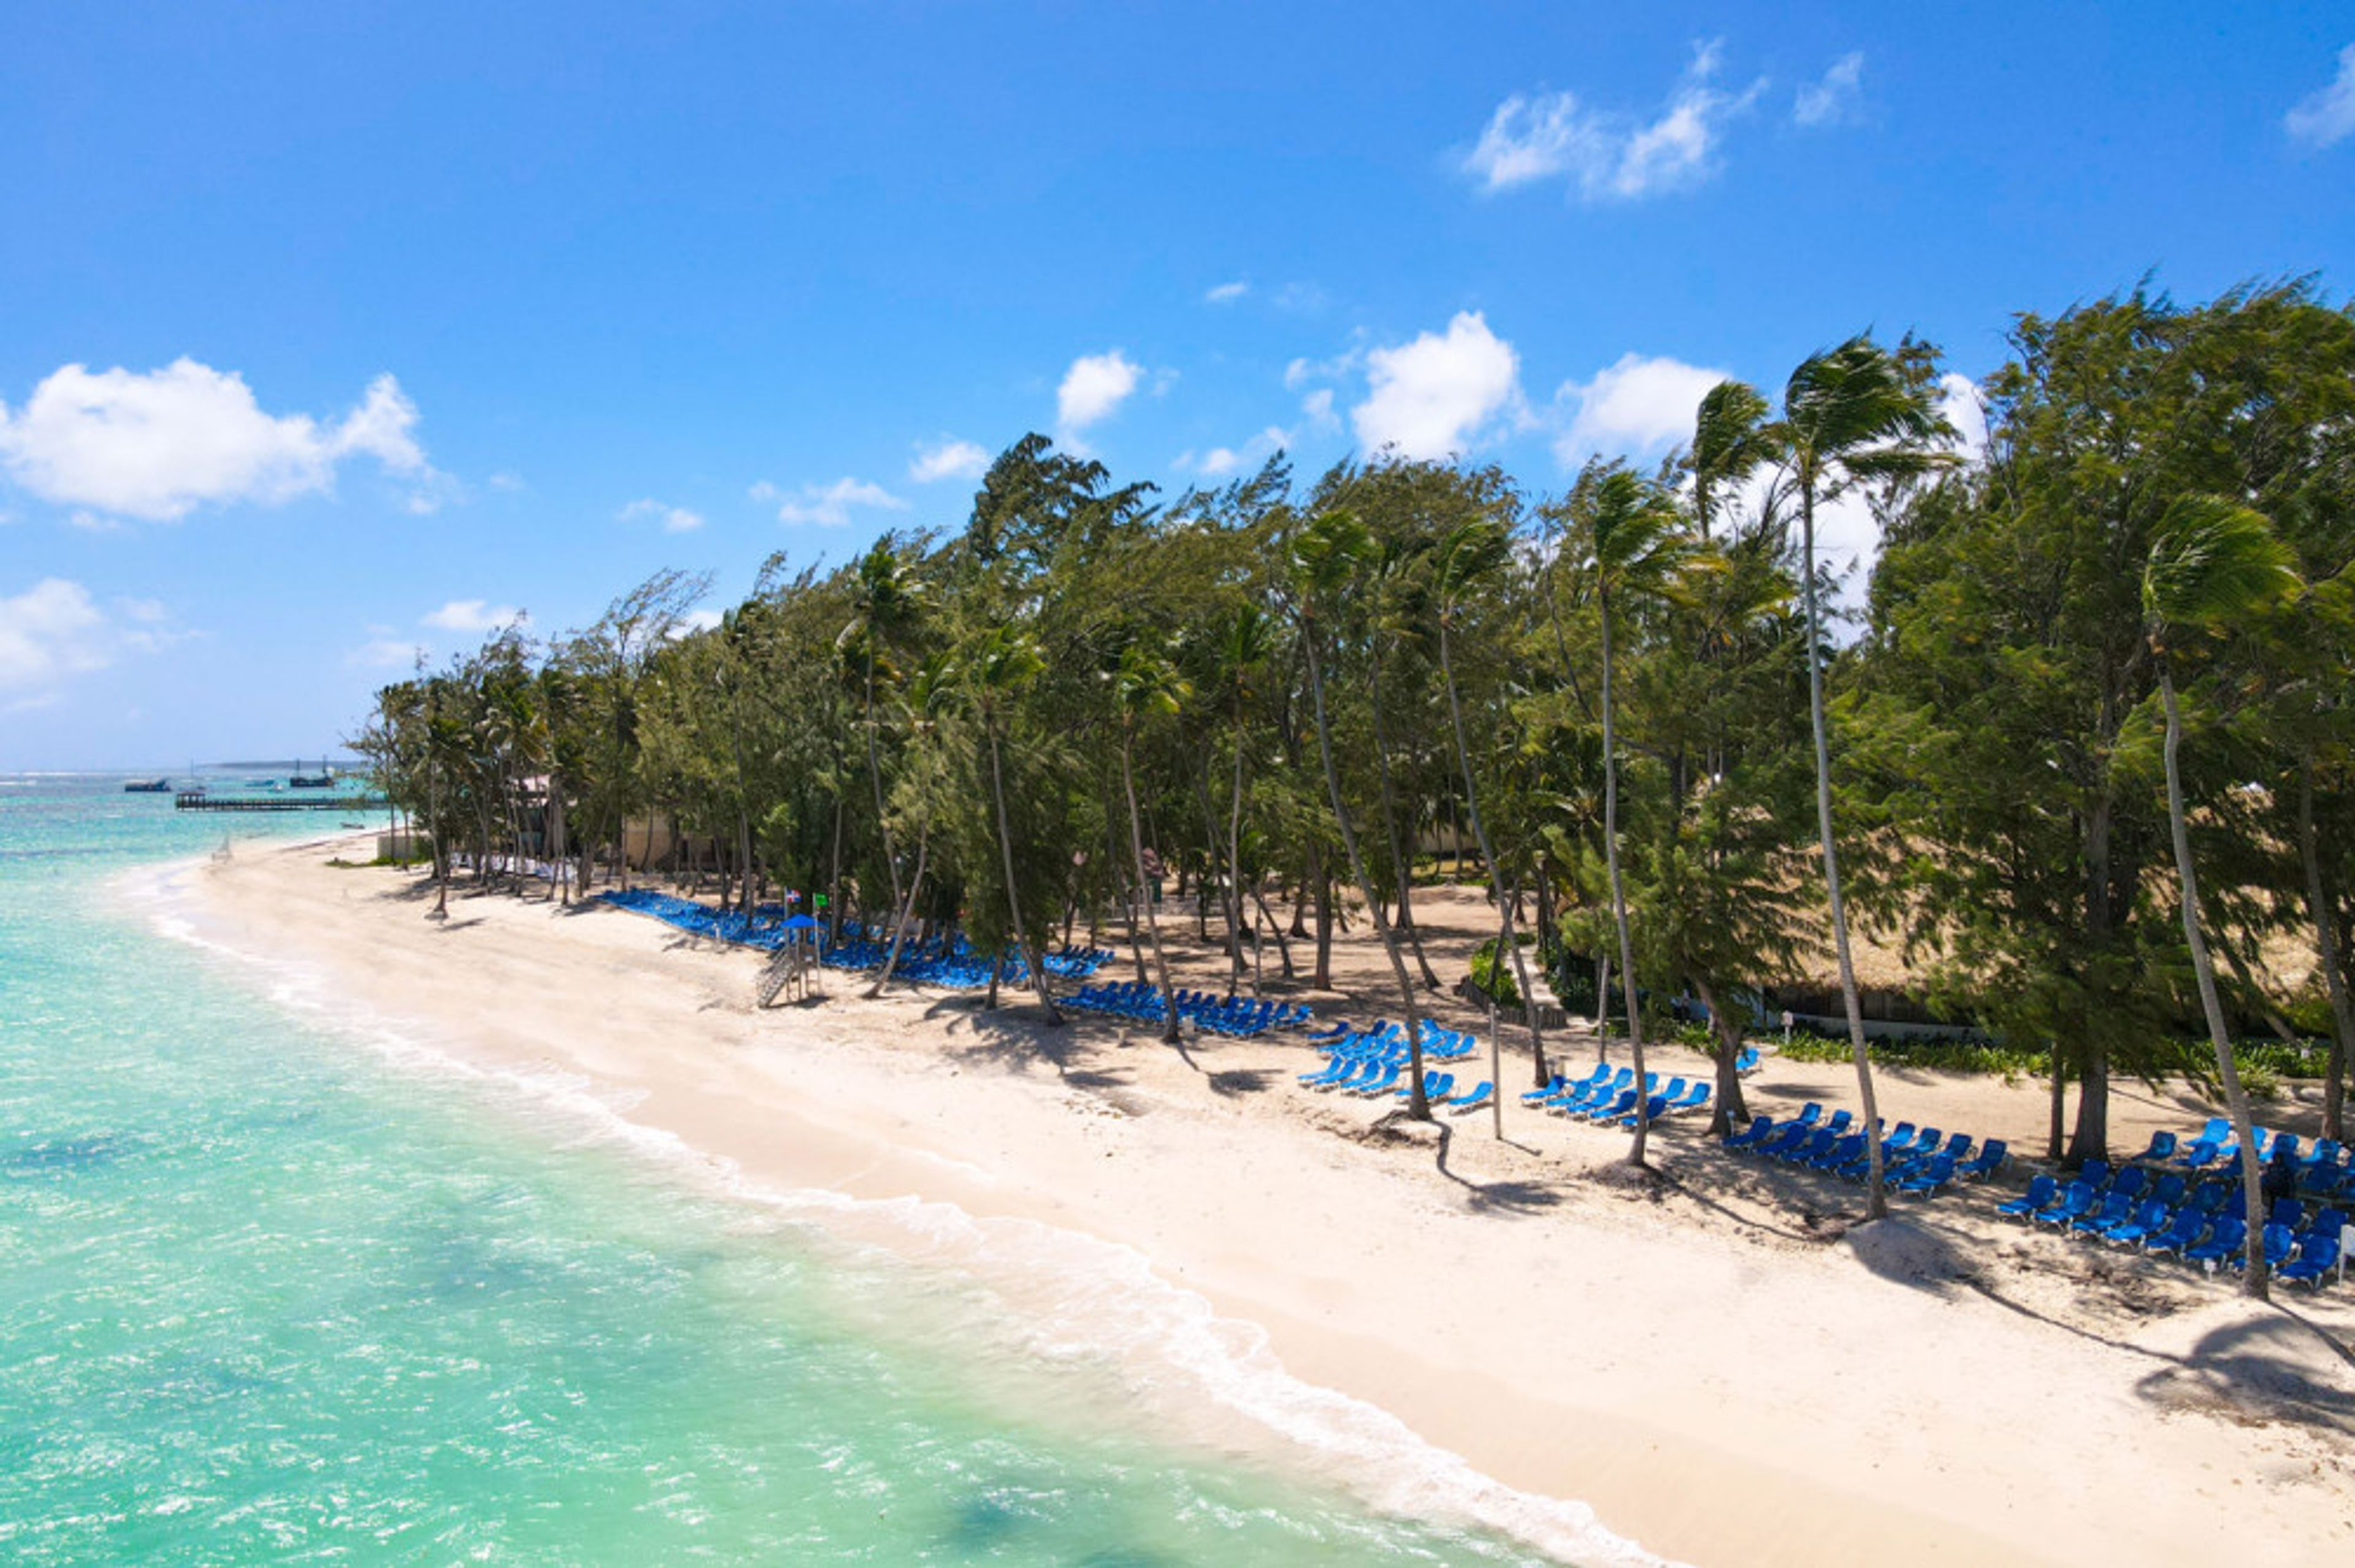 Vista Sol Punta Cana Beach Resort